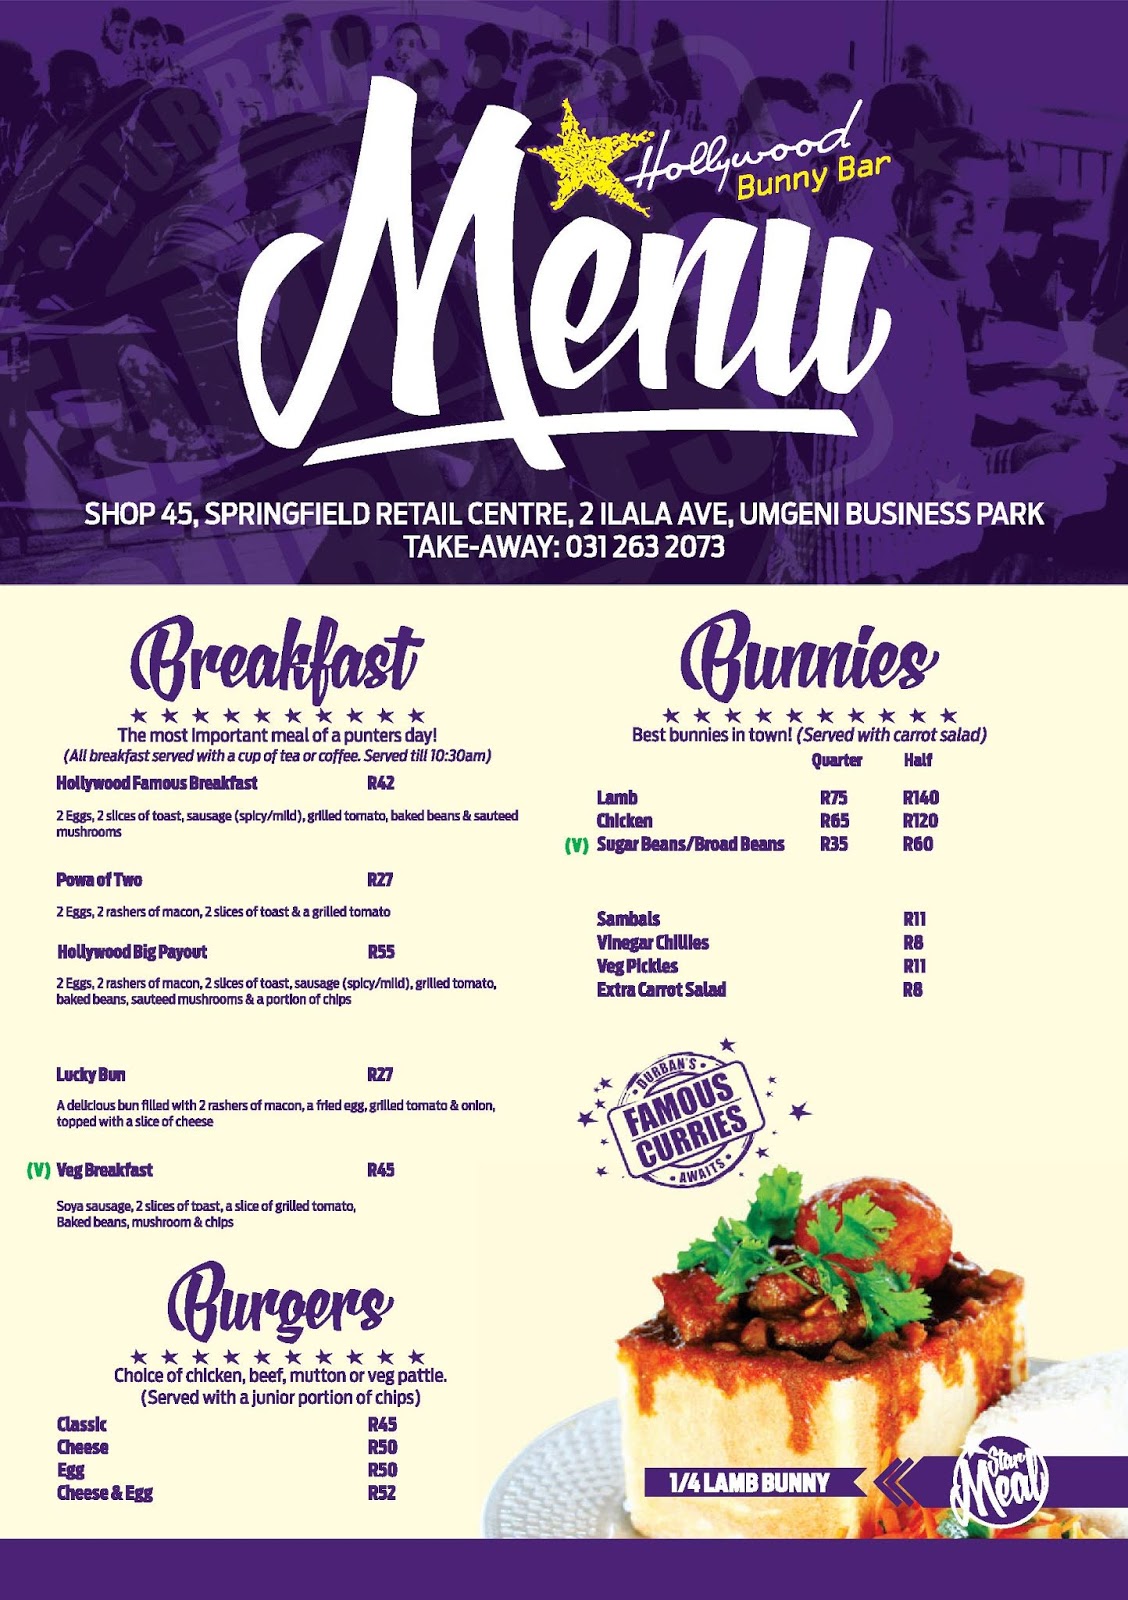 Hollywood Bunny Bar Menu - Page 1 - Breakfast, Bunny Chows, Burgers